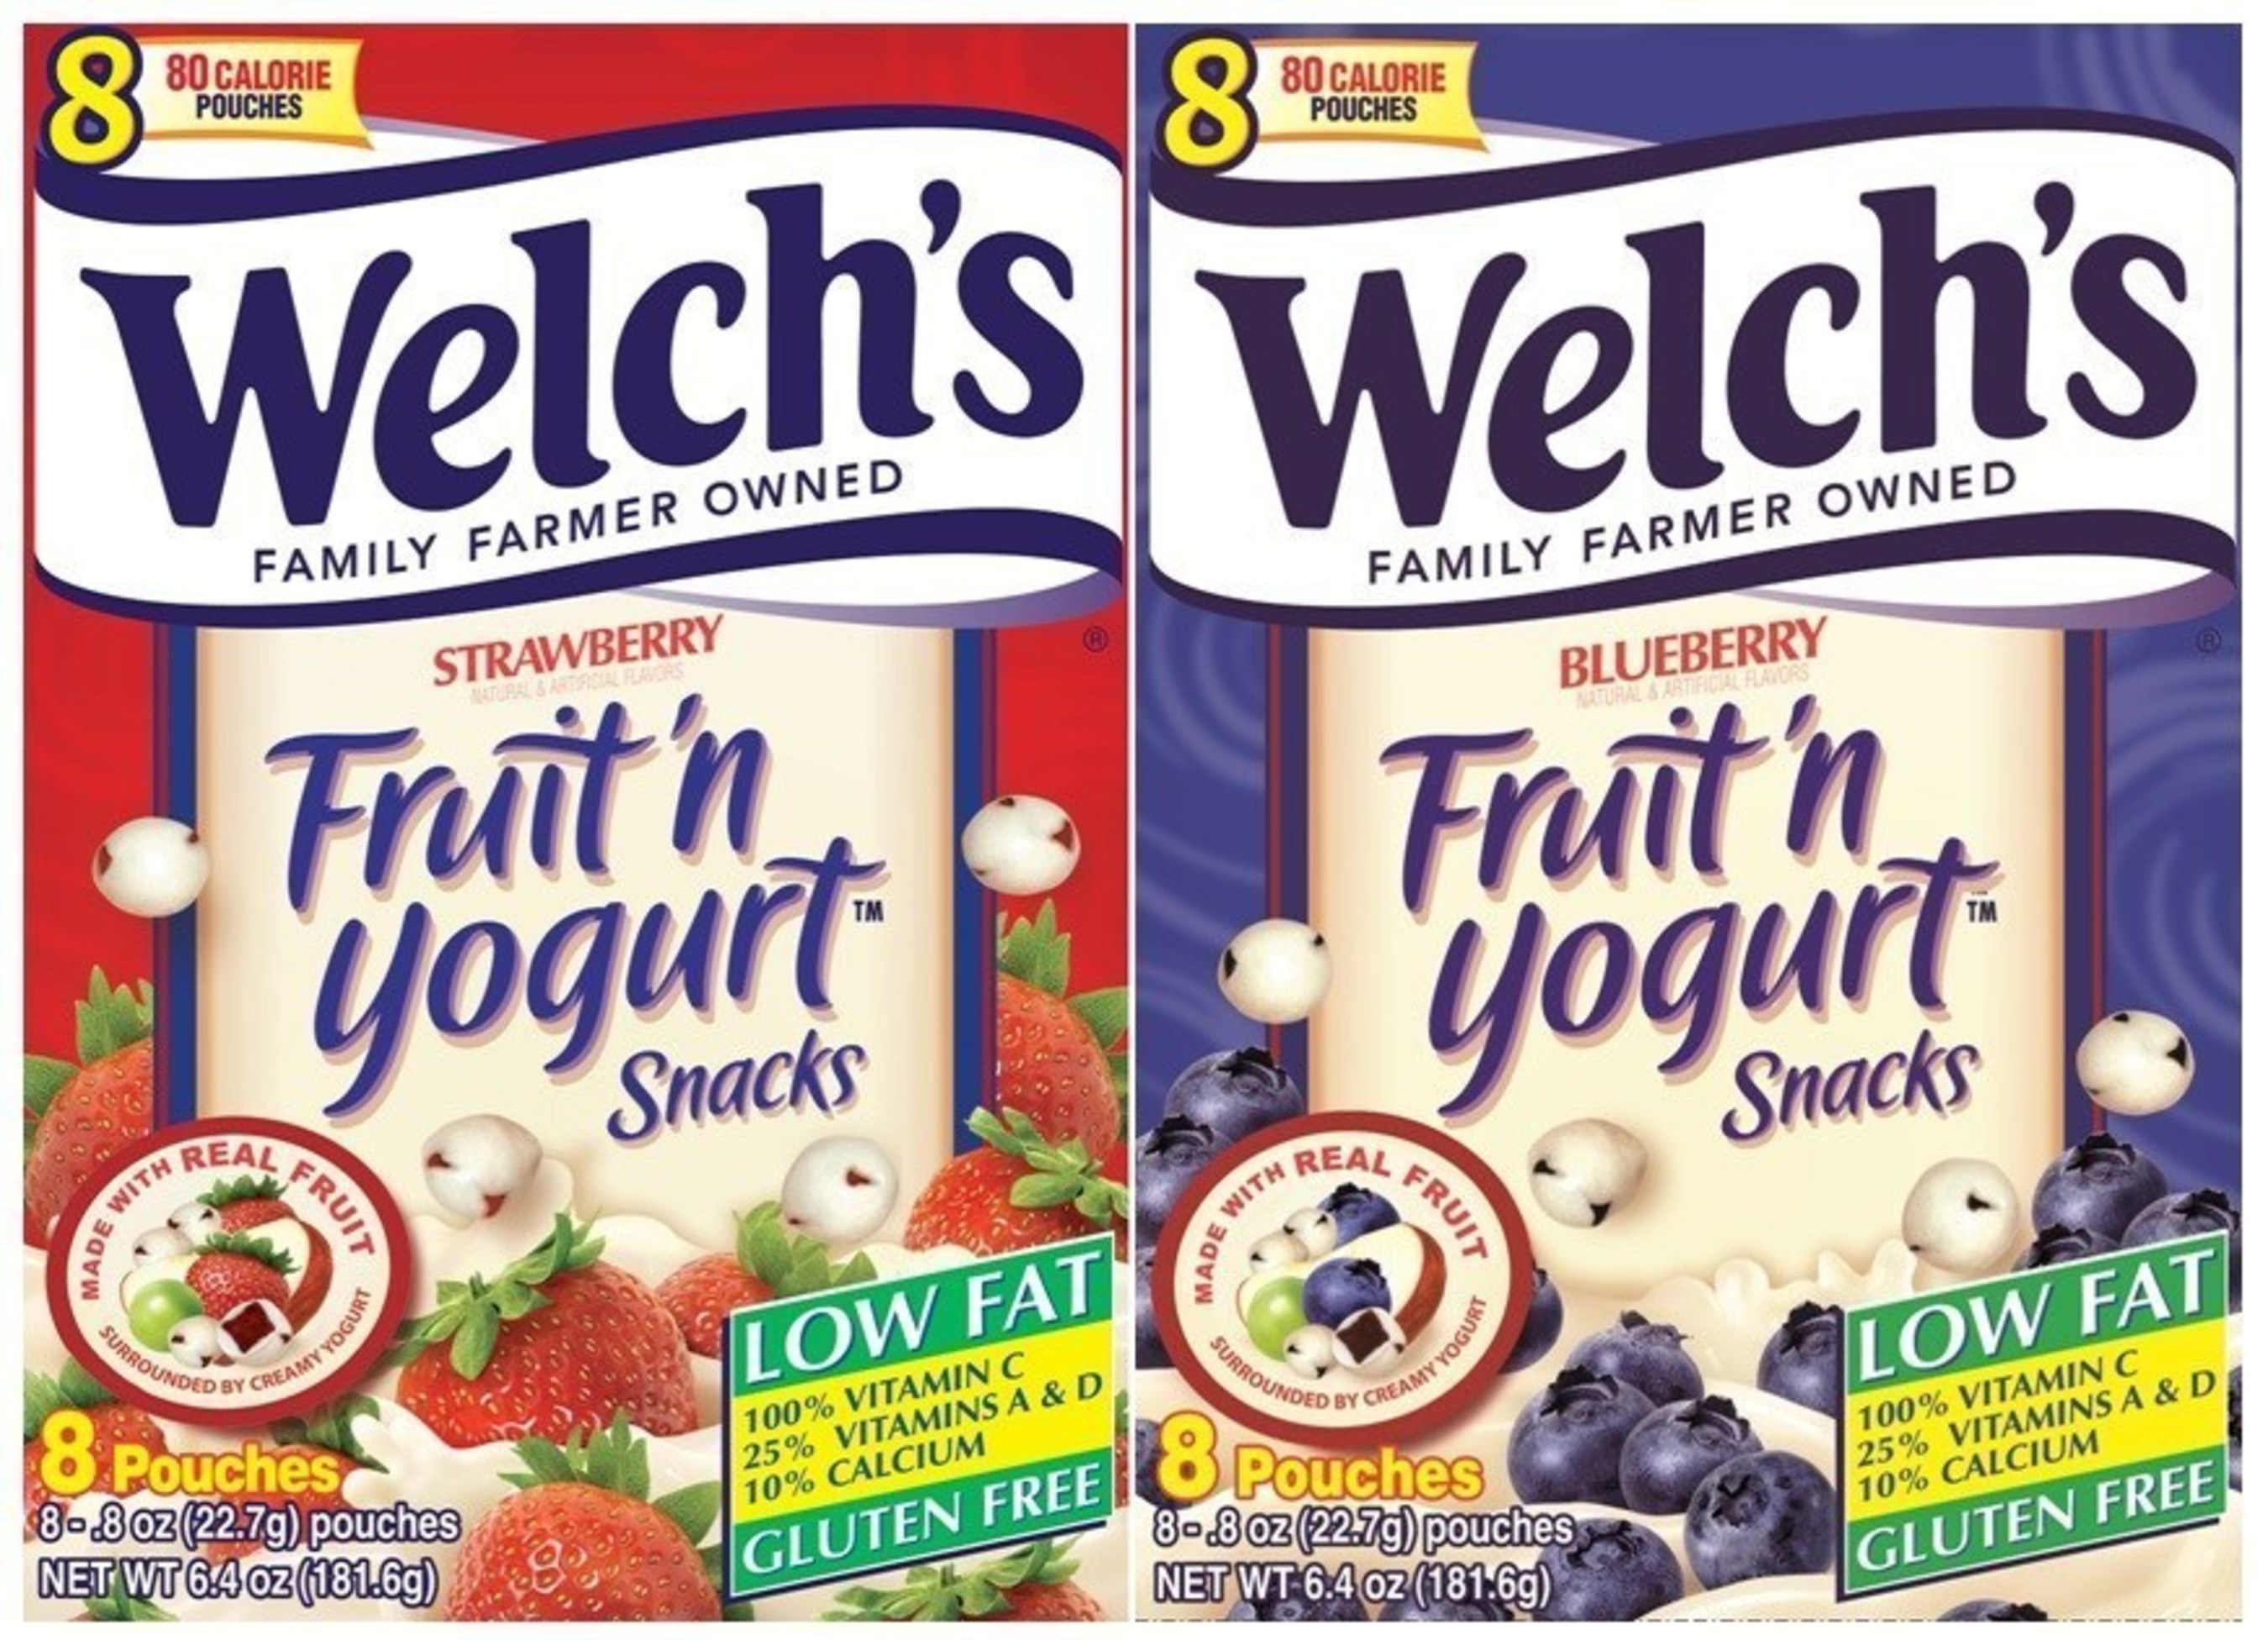 Welch's(R) Fruit 'n Yogurt(TM) Snacks Declares Sunday, April 19 "Fruit 'n Yogurt(TM) Day"